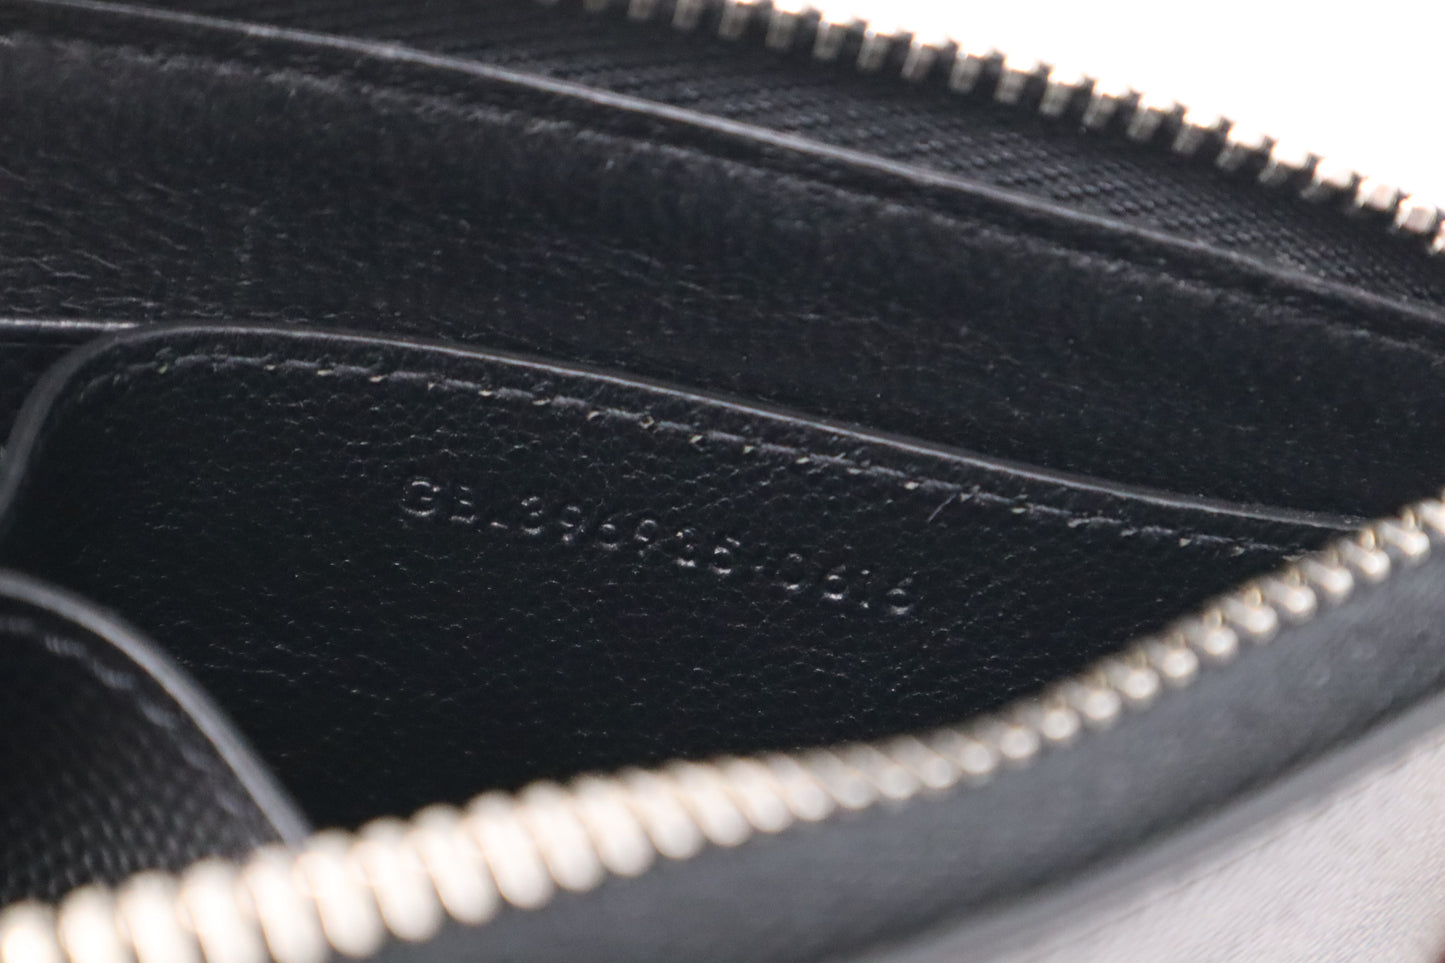 YSL Saint Laurent Zippy Card Case in Black Pebbled Leather